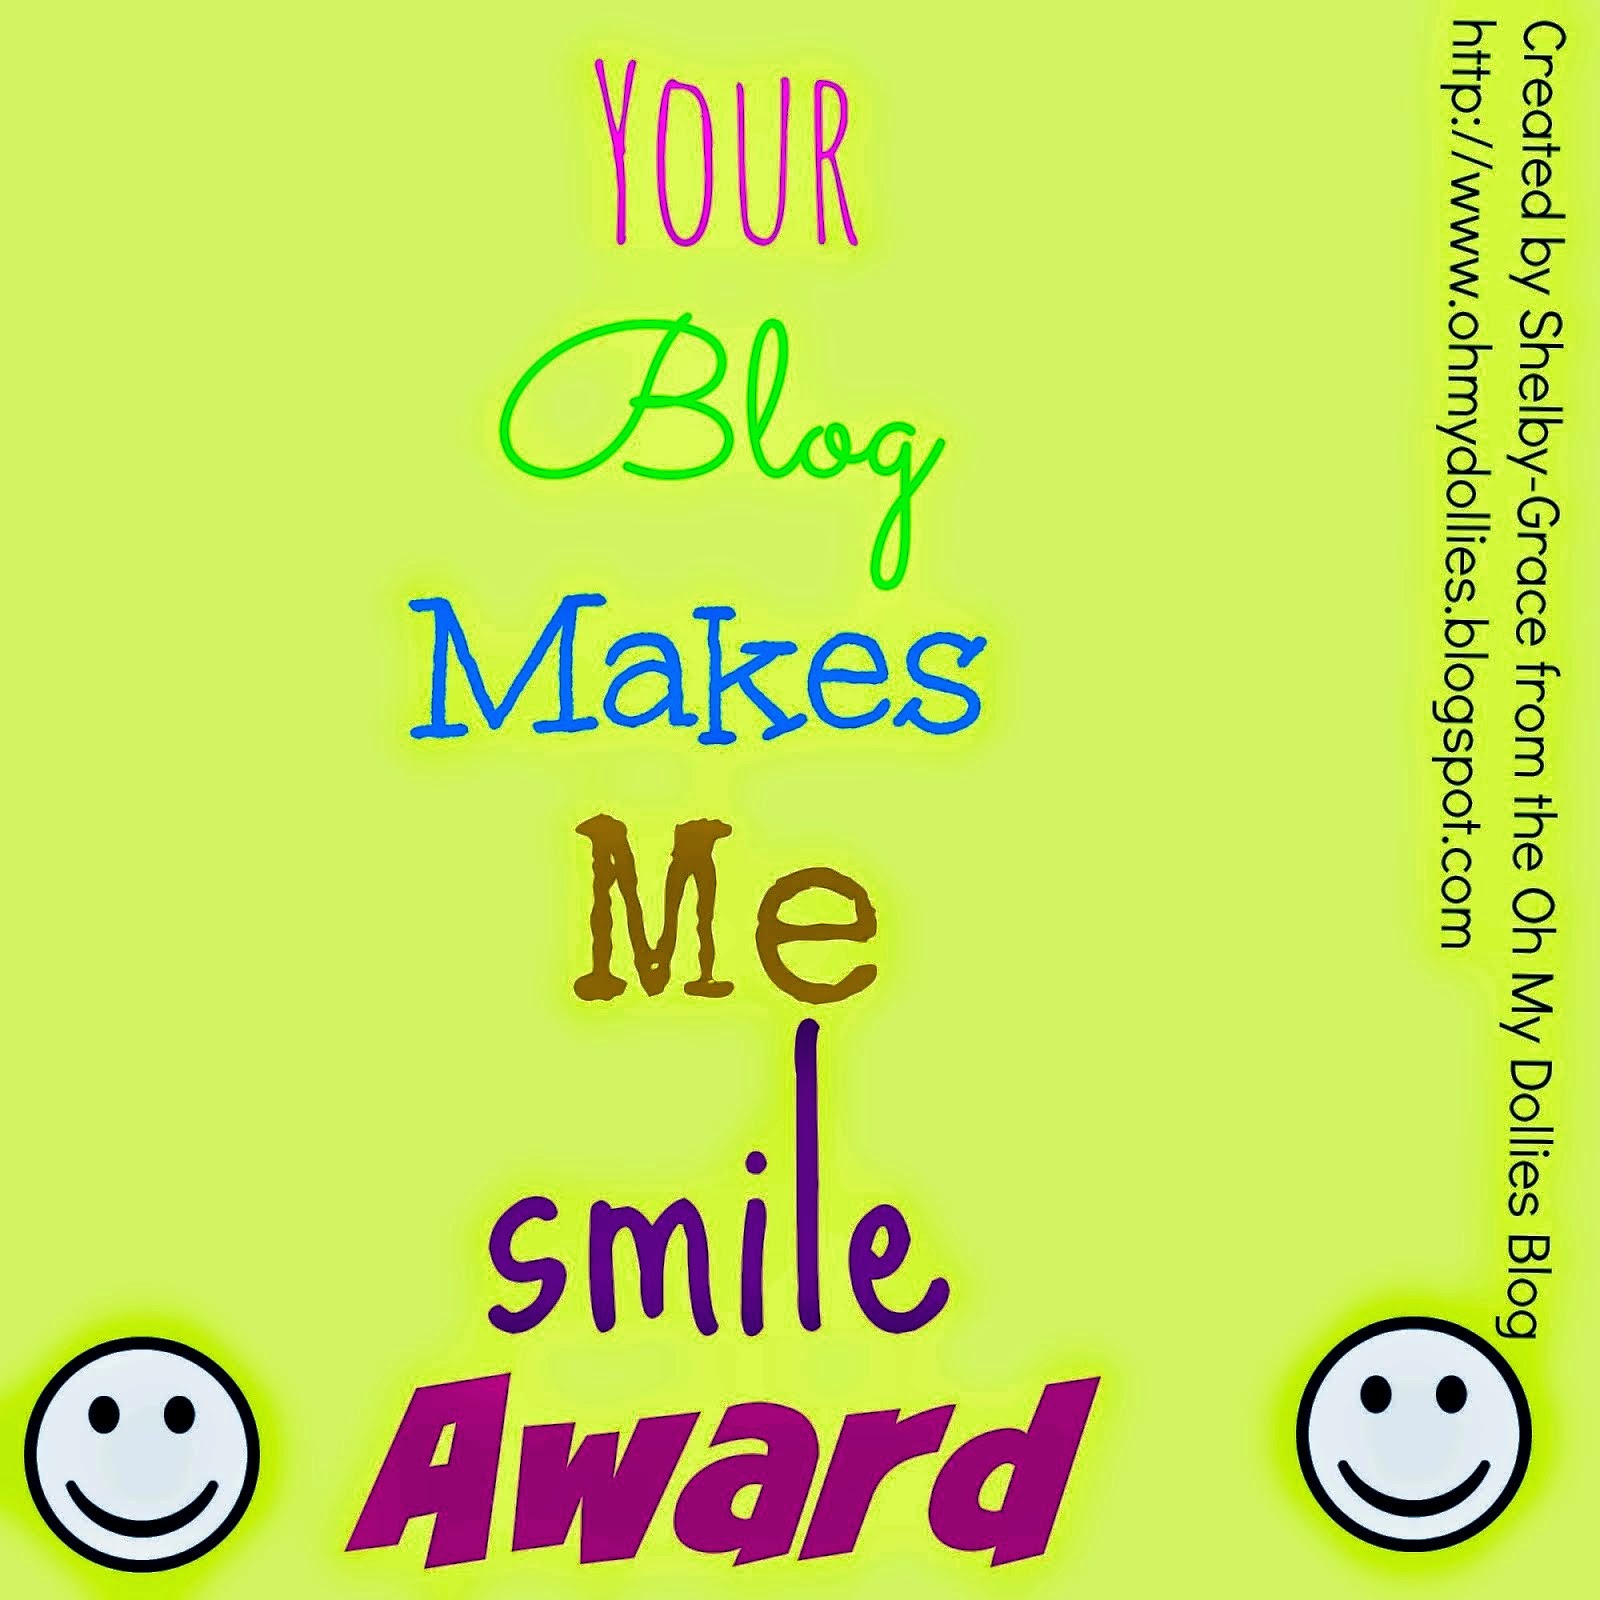 Your Blog Makes Me Smile Award